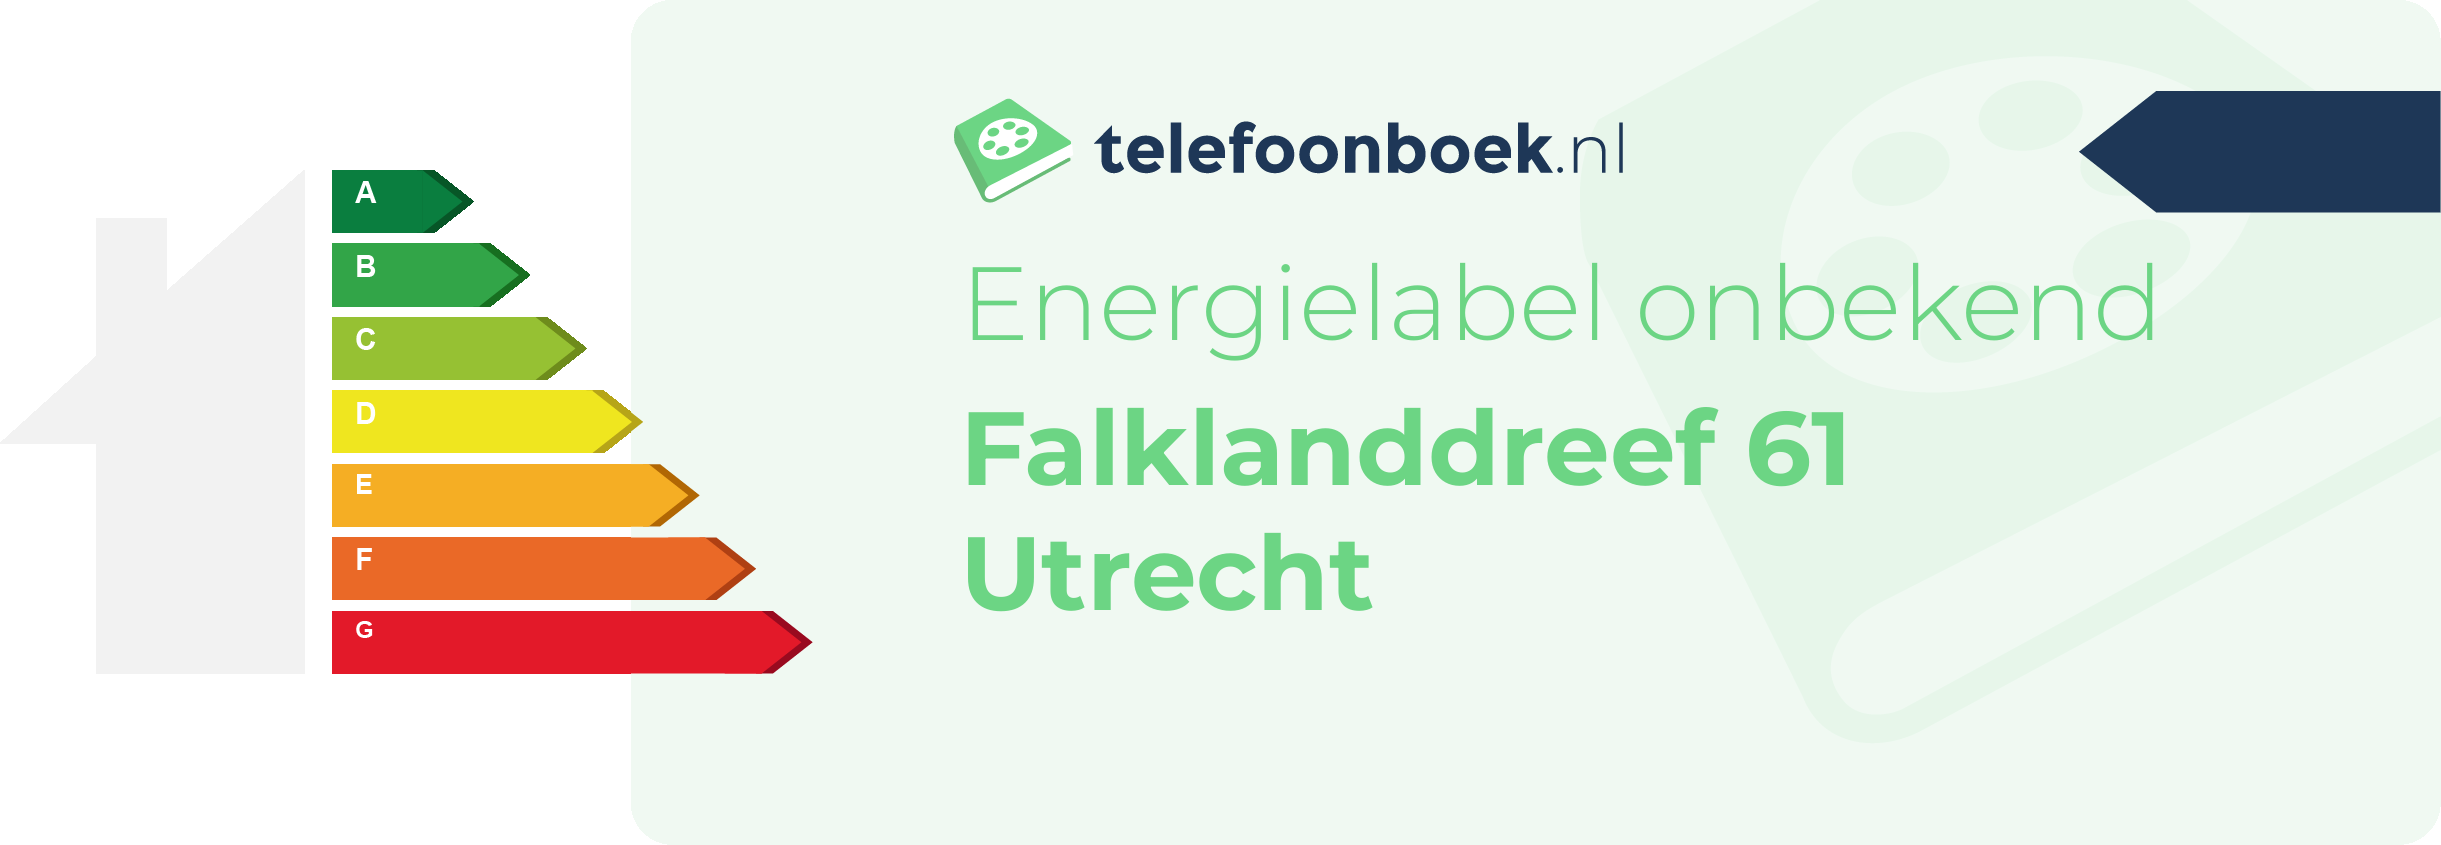 Energielabel Falklanddreef 61 Utrecht